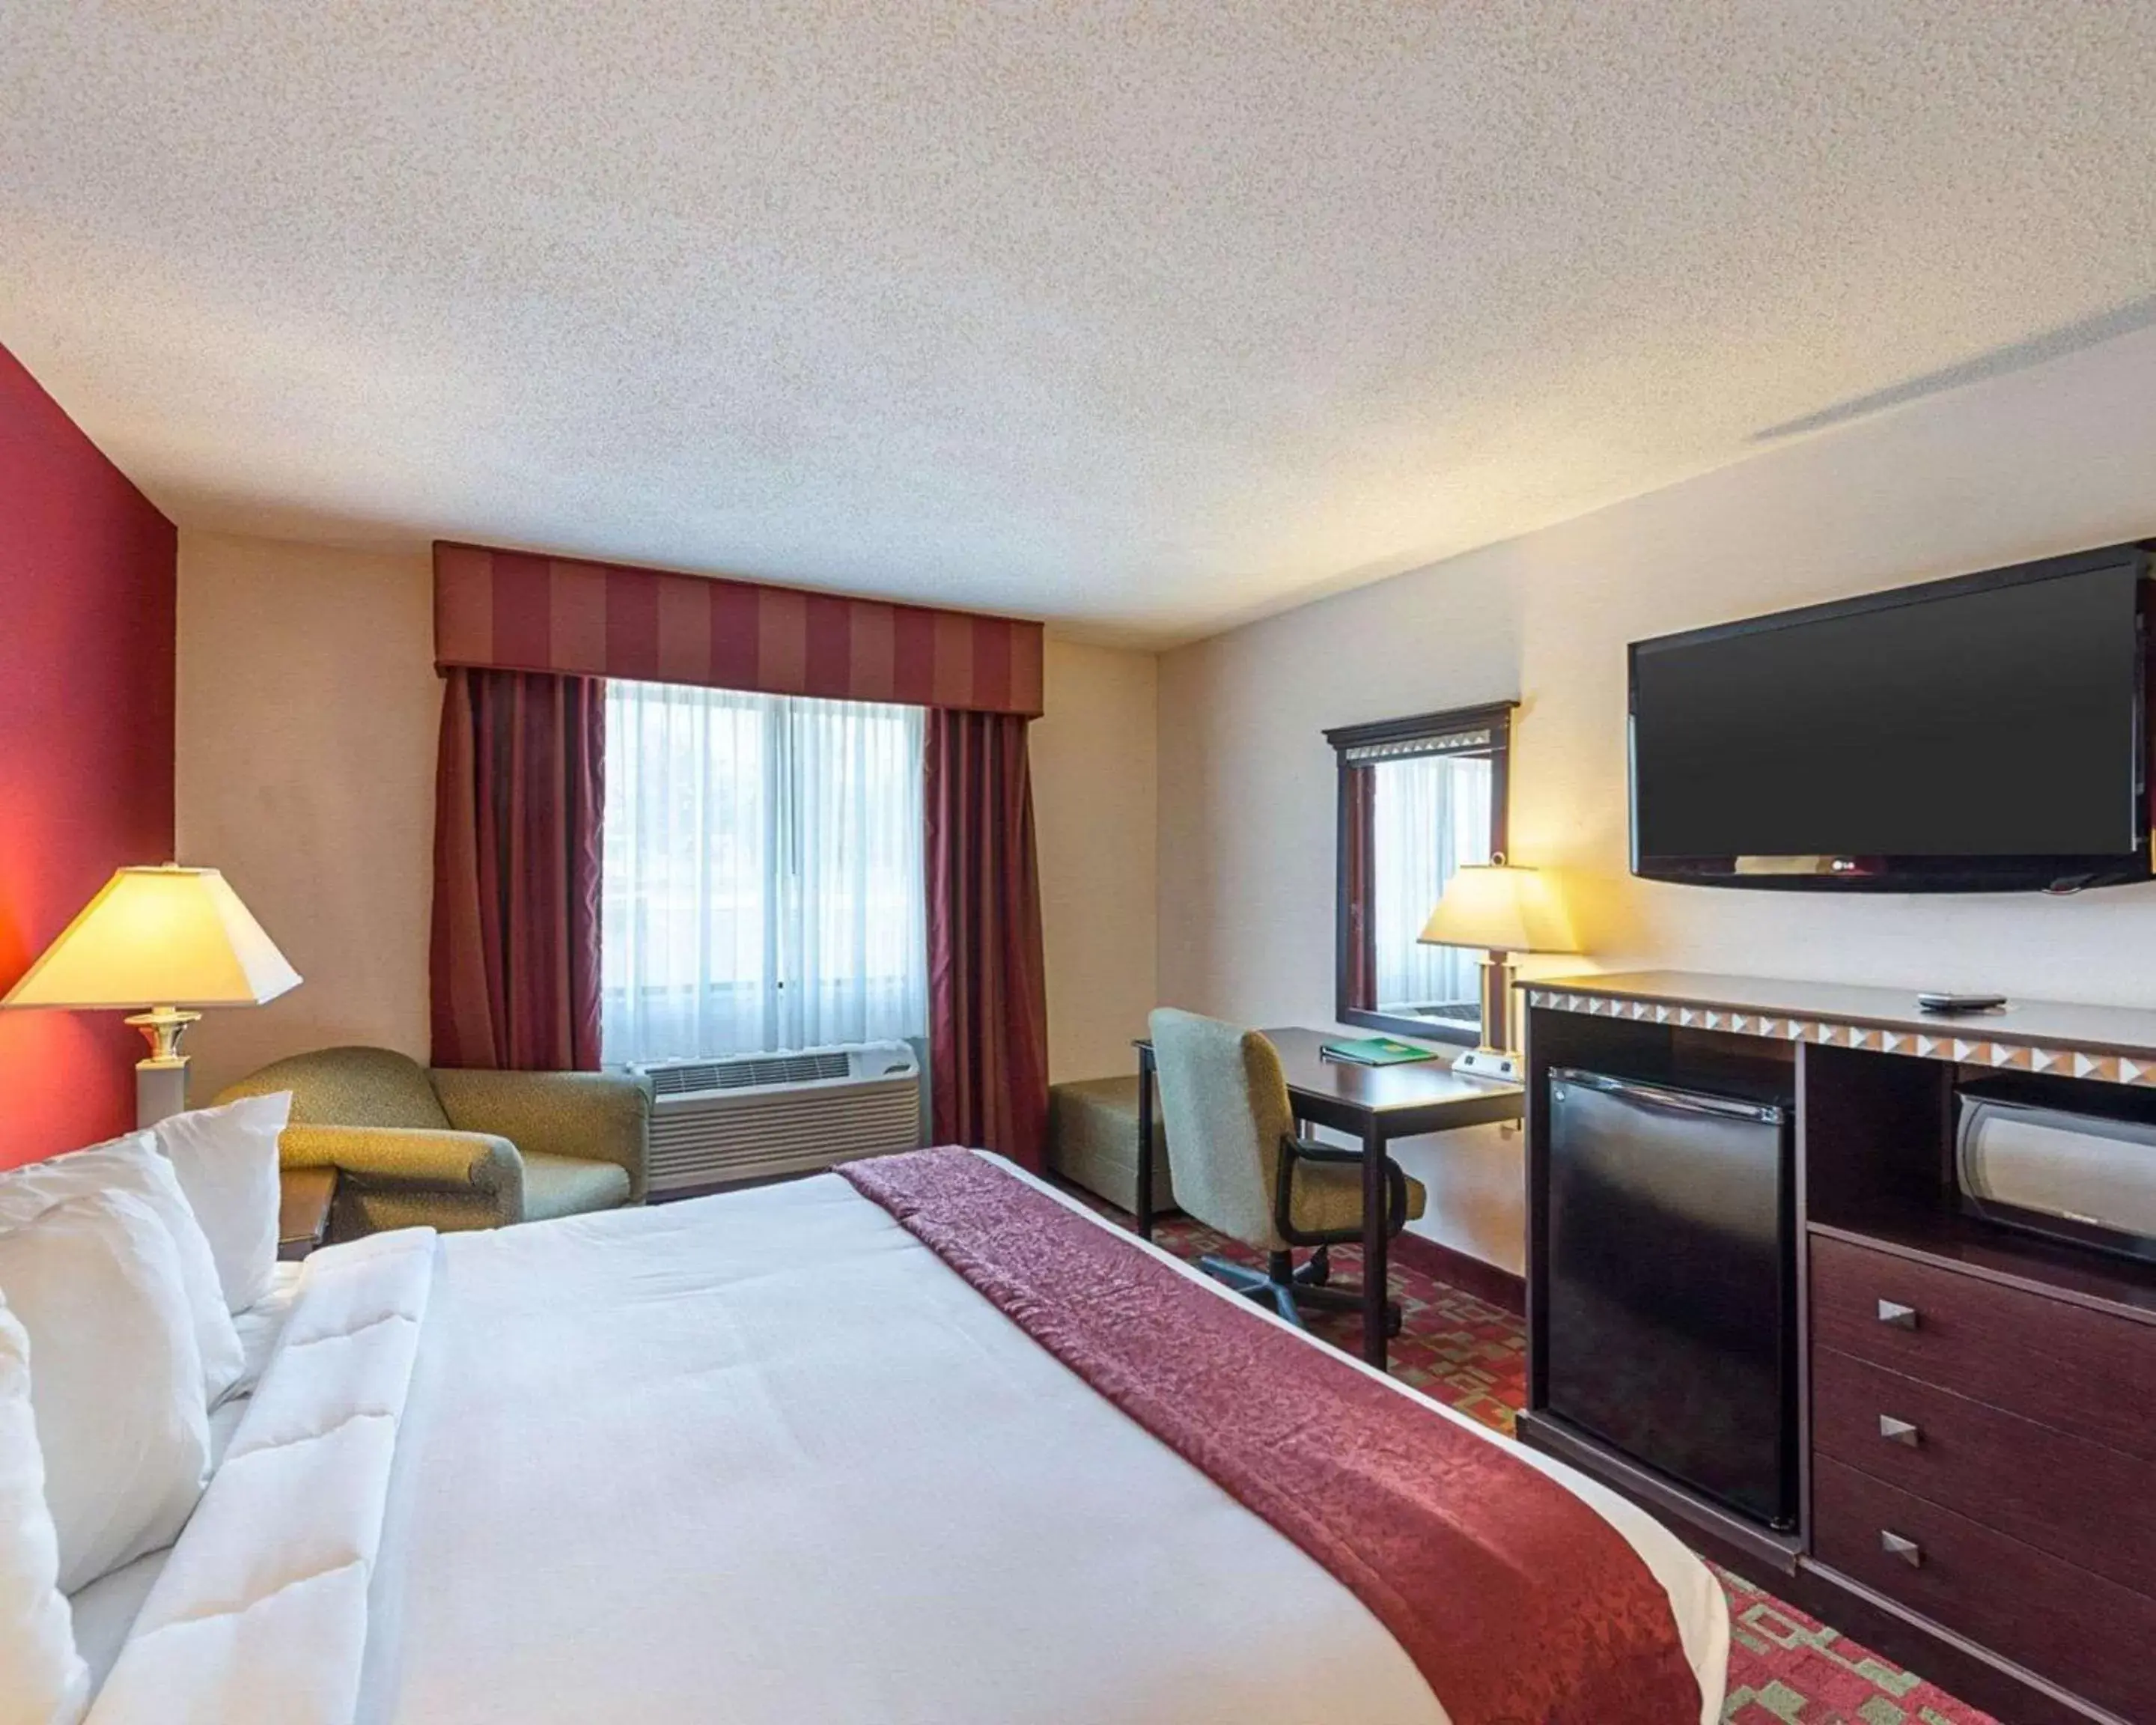 Bedroom, TV/Entertainment Center in Quality Inn & Suites - Gettysburg